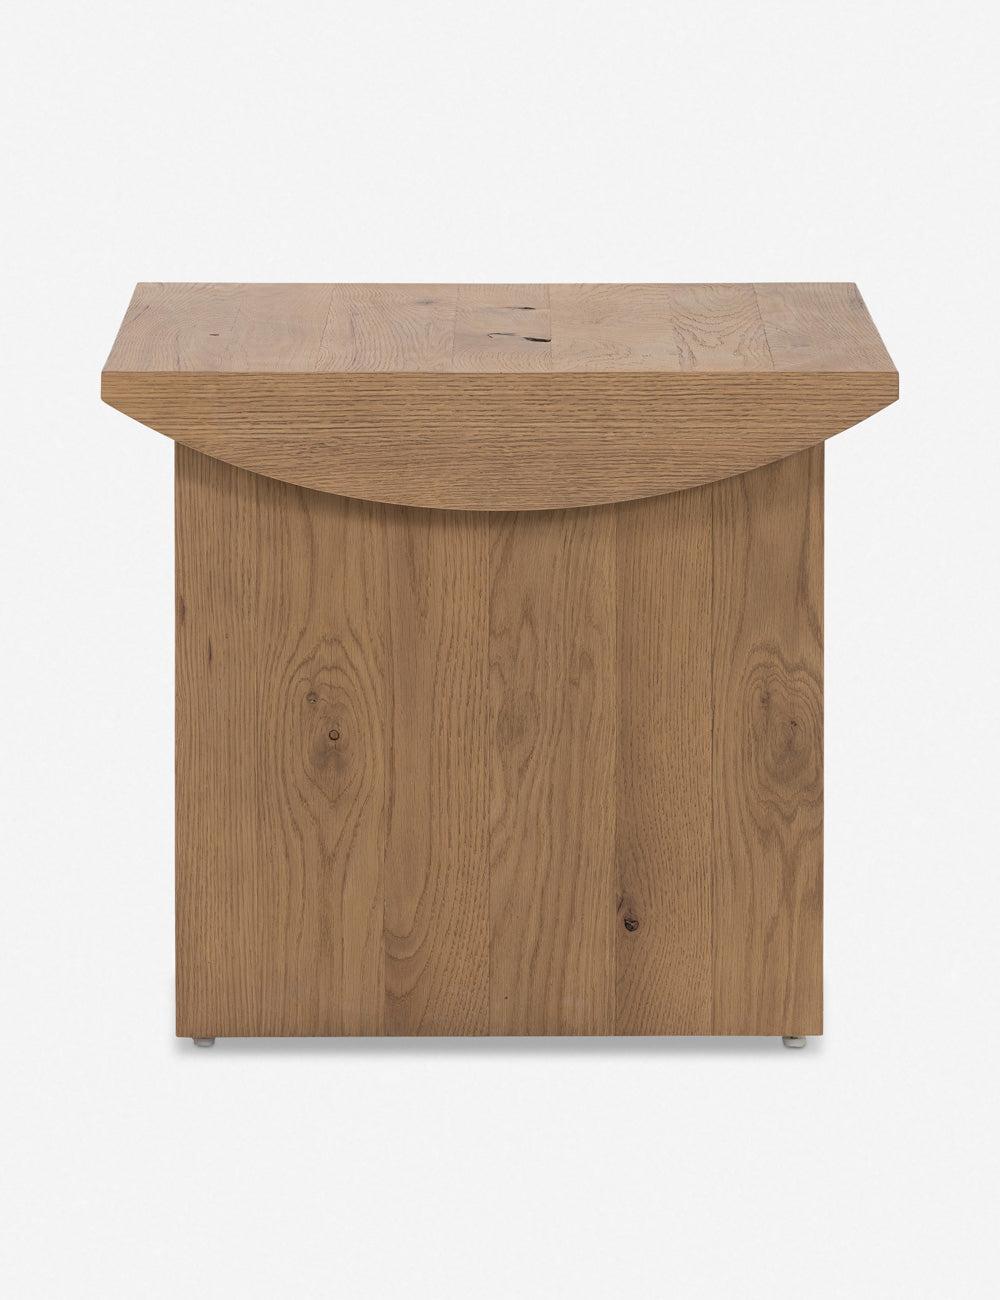 Remwald Overscale Rectangular Oak Veneer Side Table